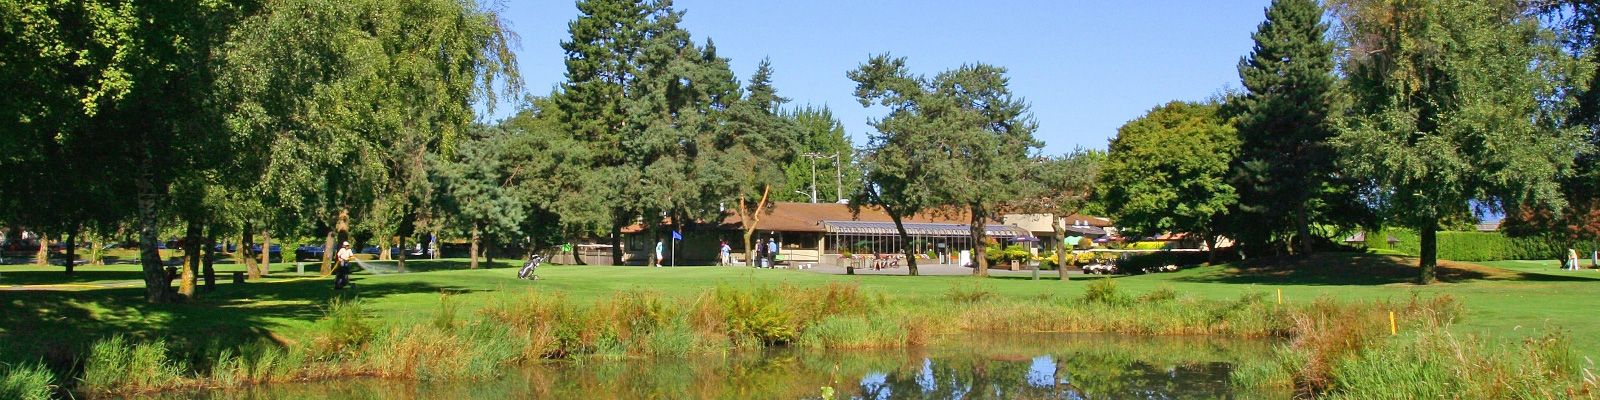 Meetings - Greenacres Golf Course